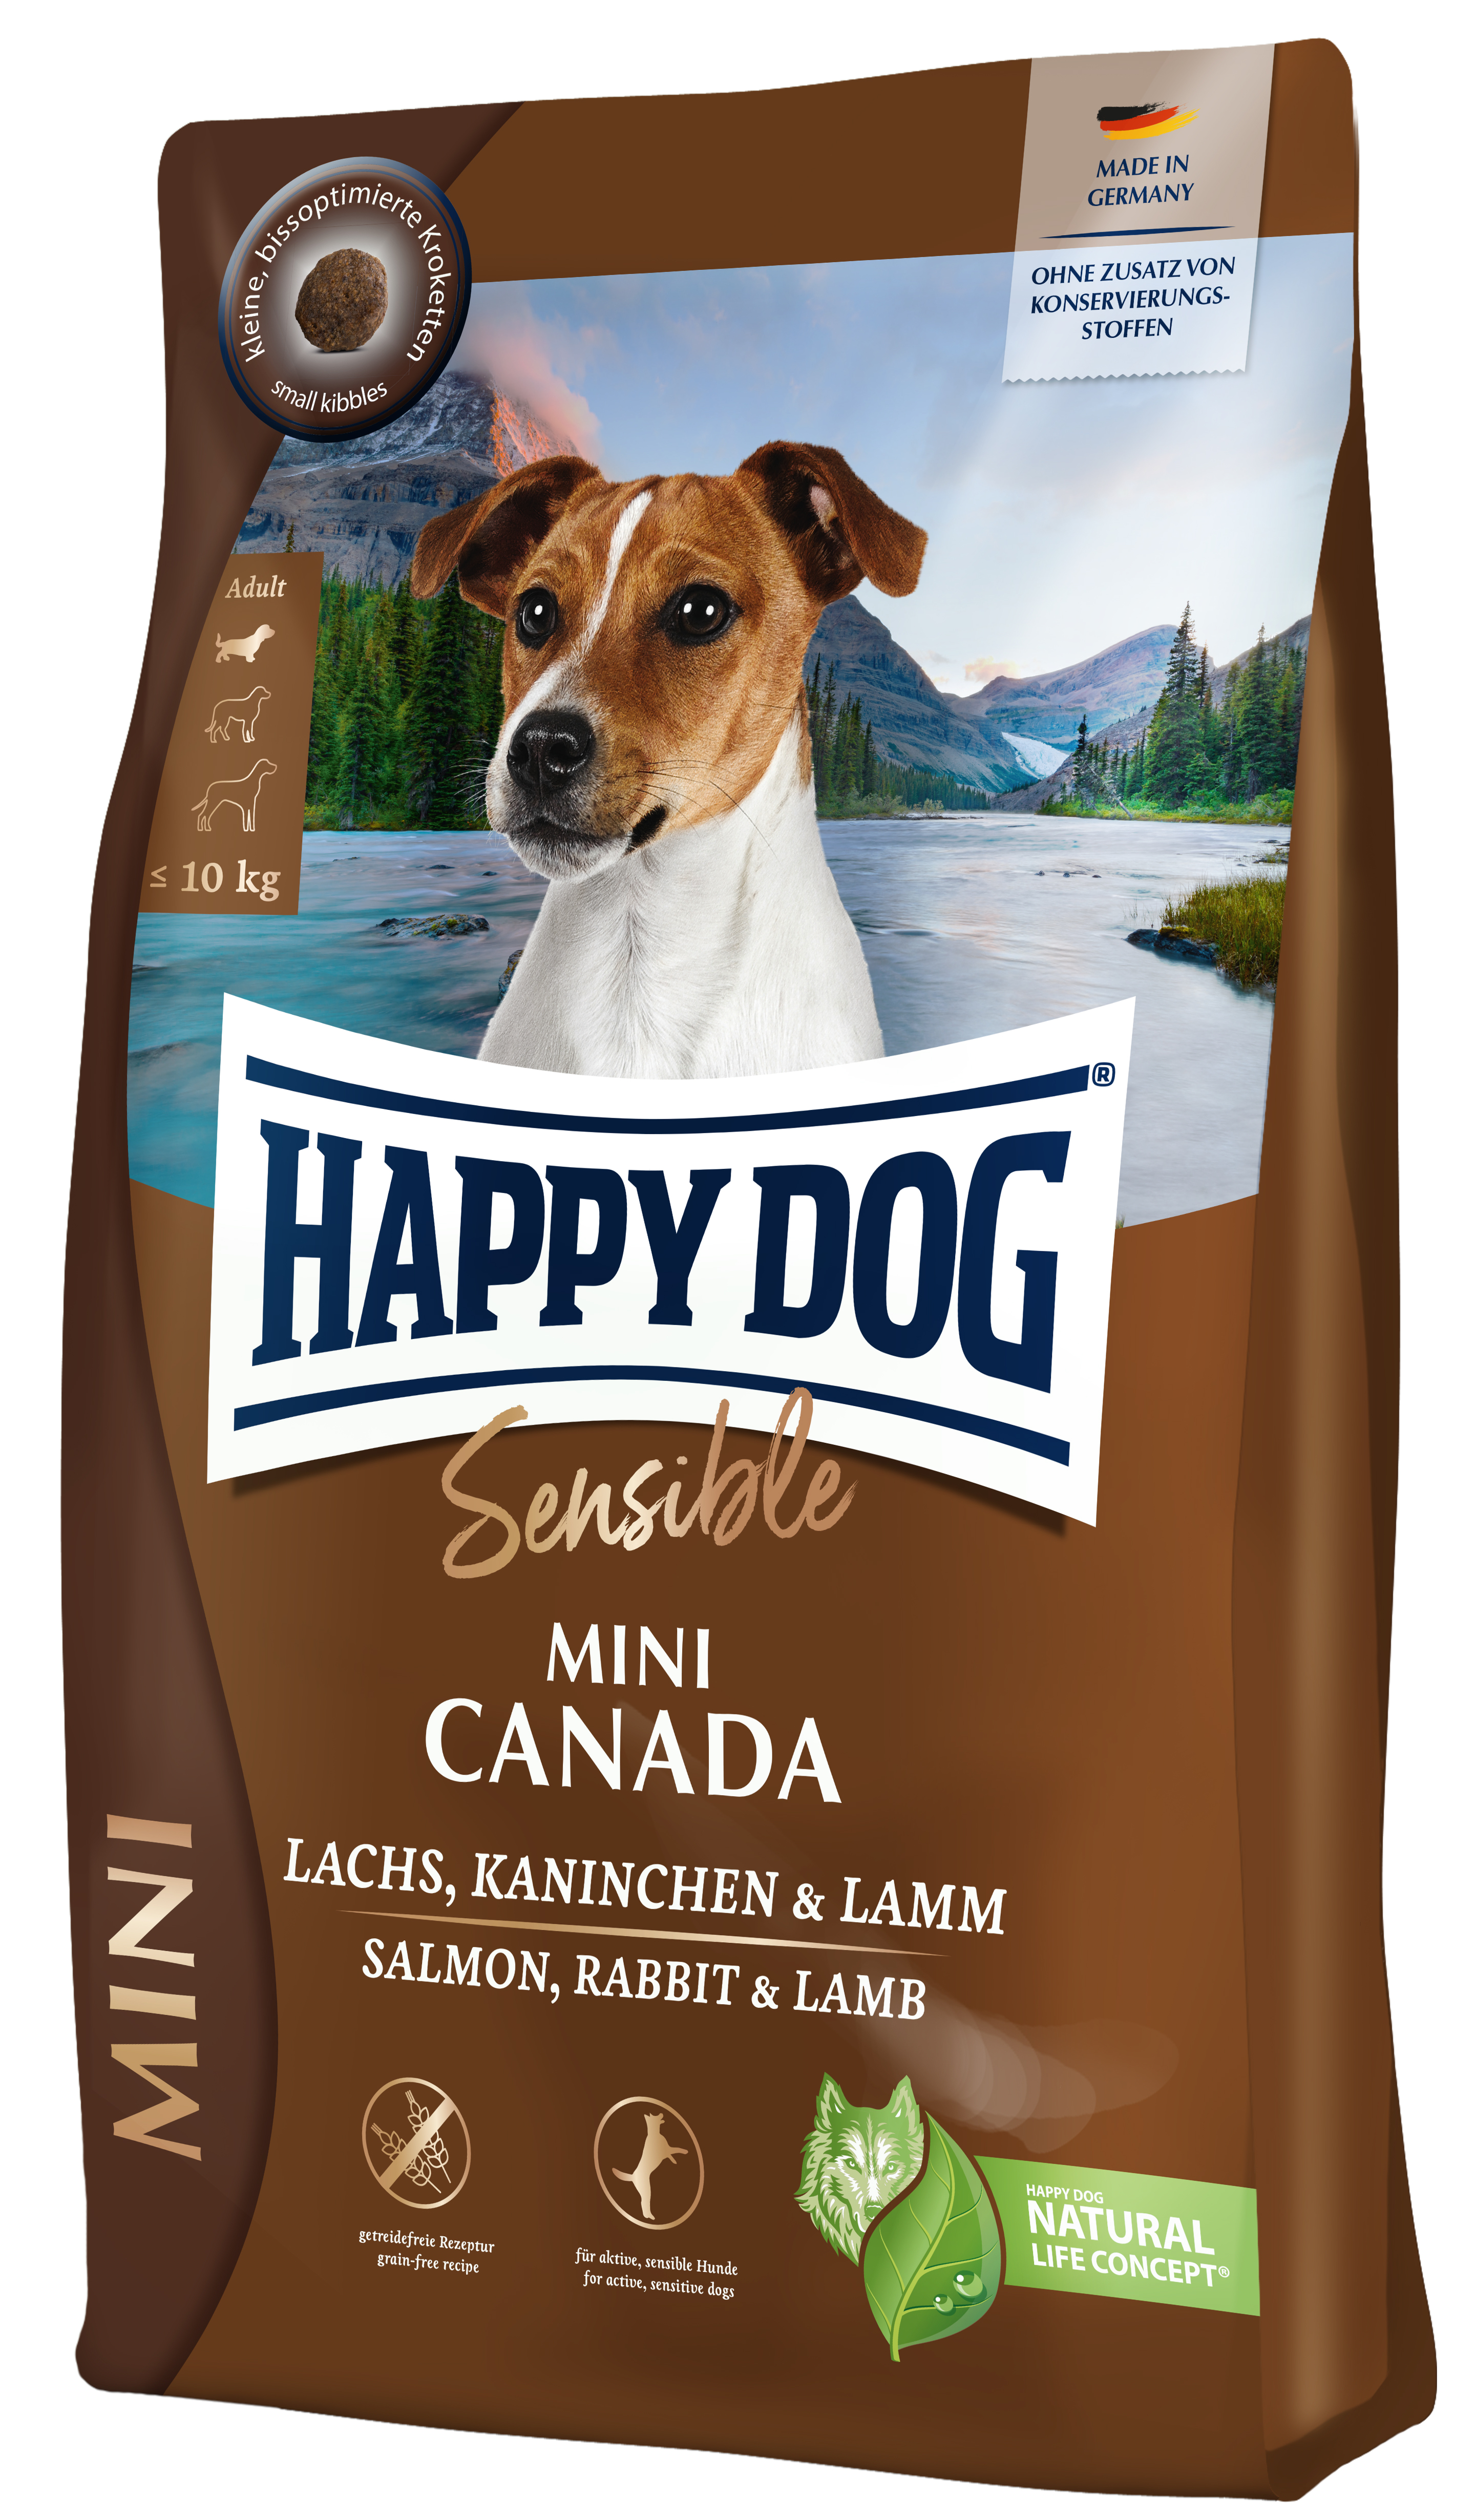 Happy Dog Sensible Mini Canada 800g